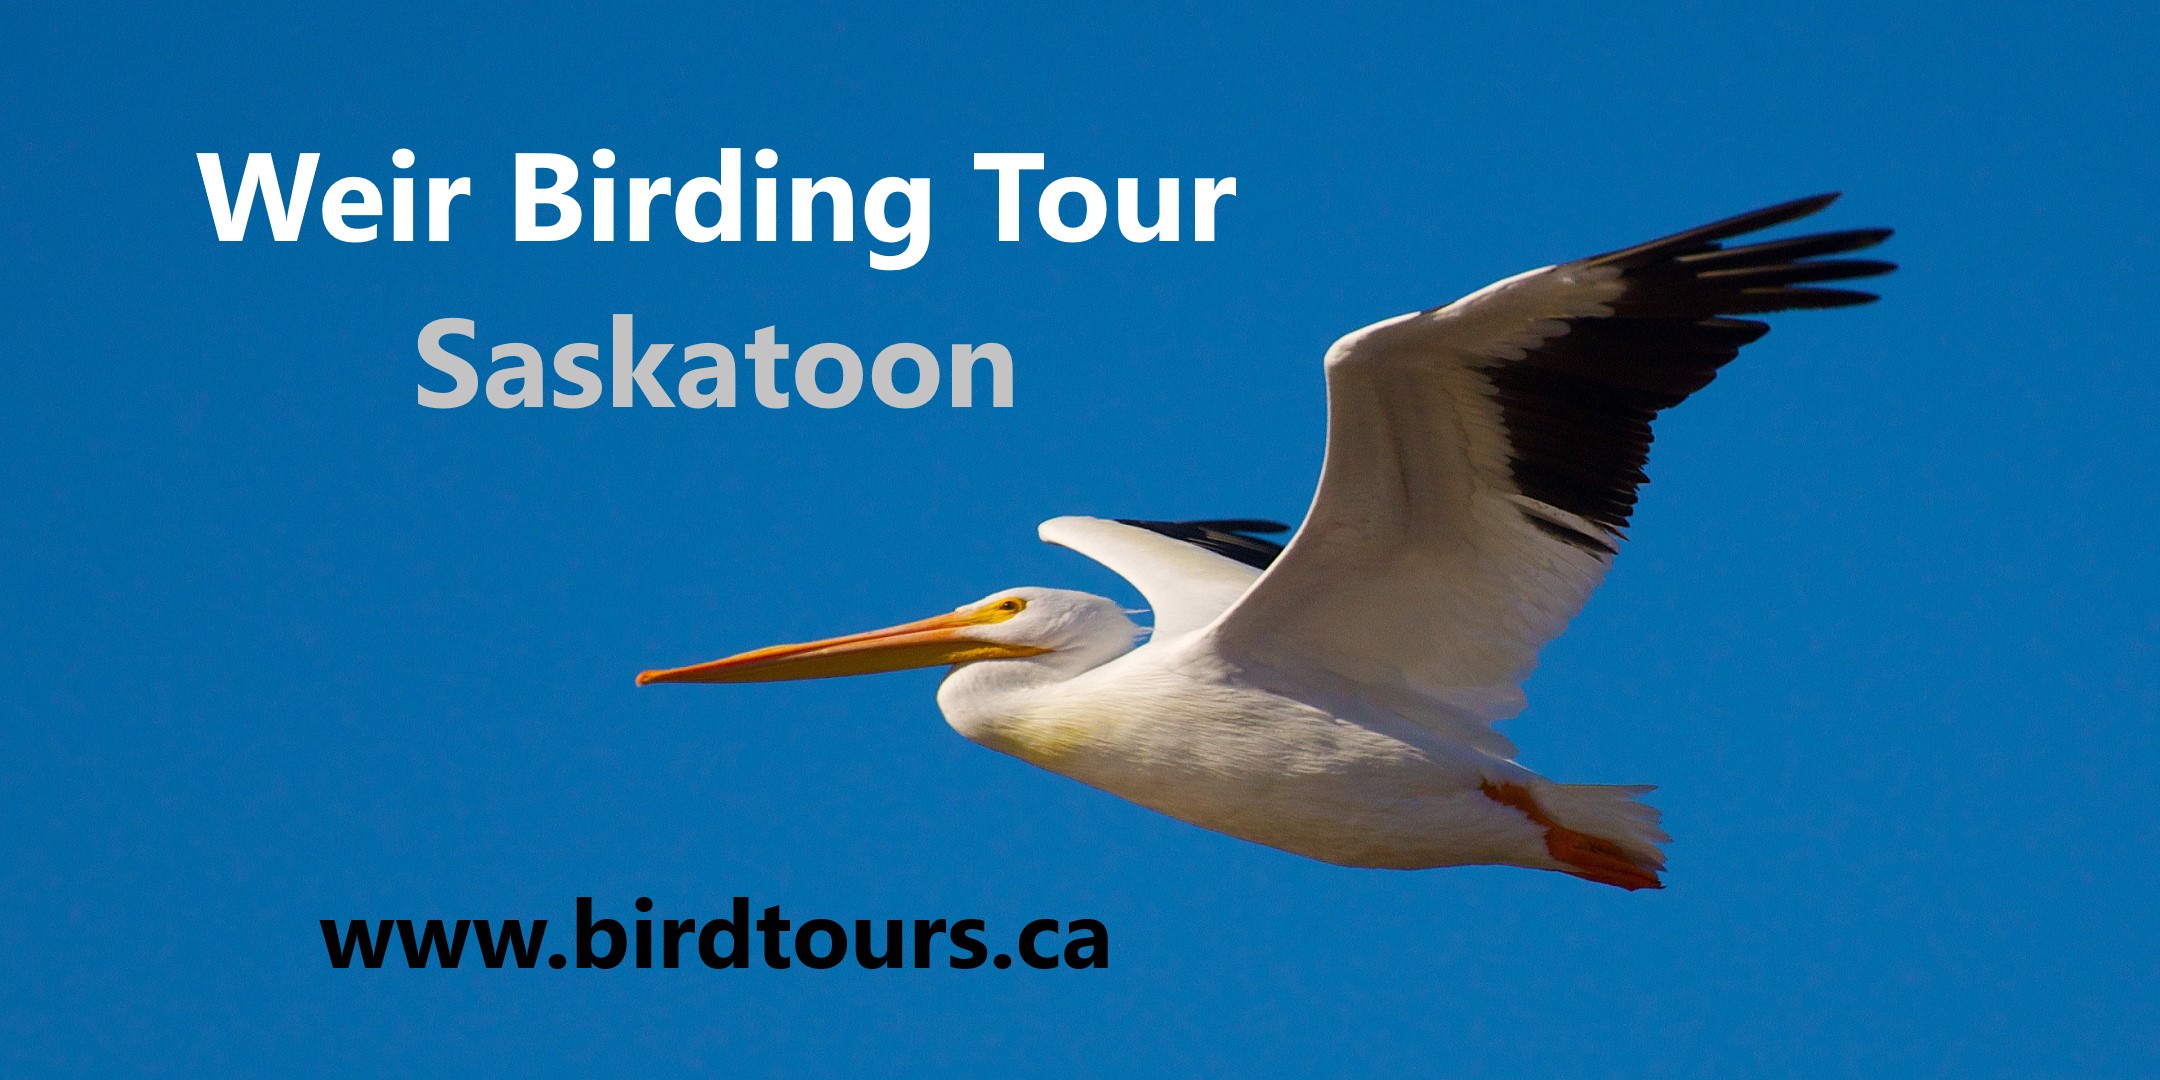 Weir Birding Tour